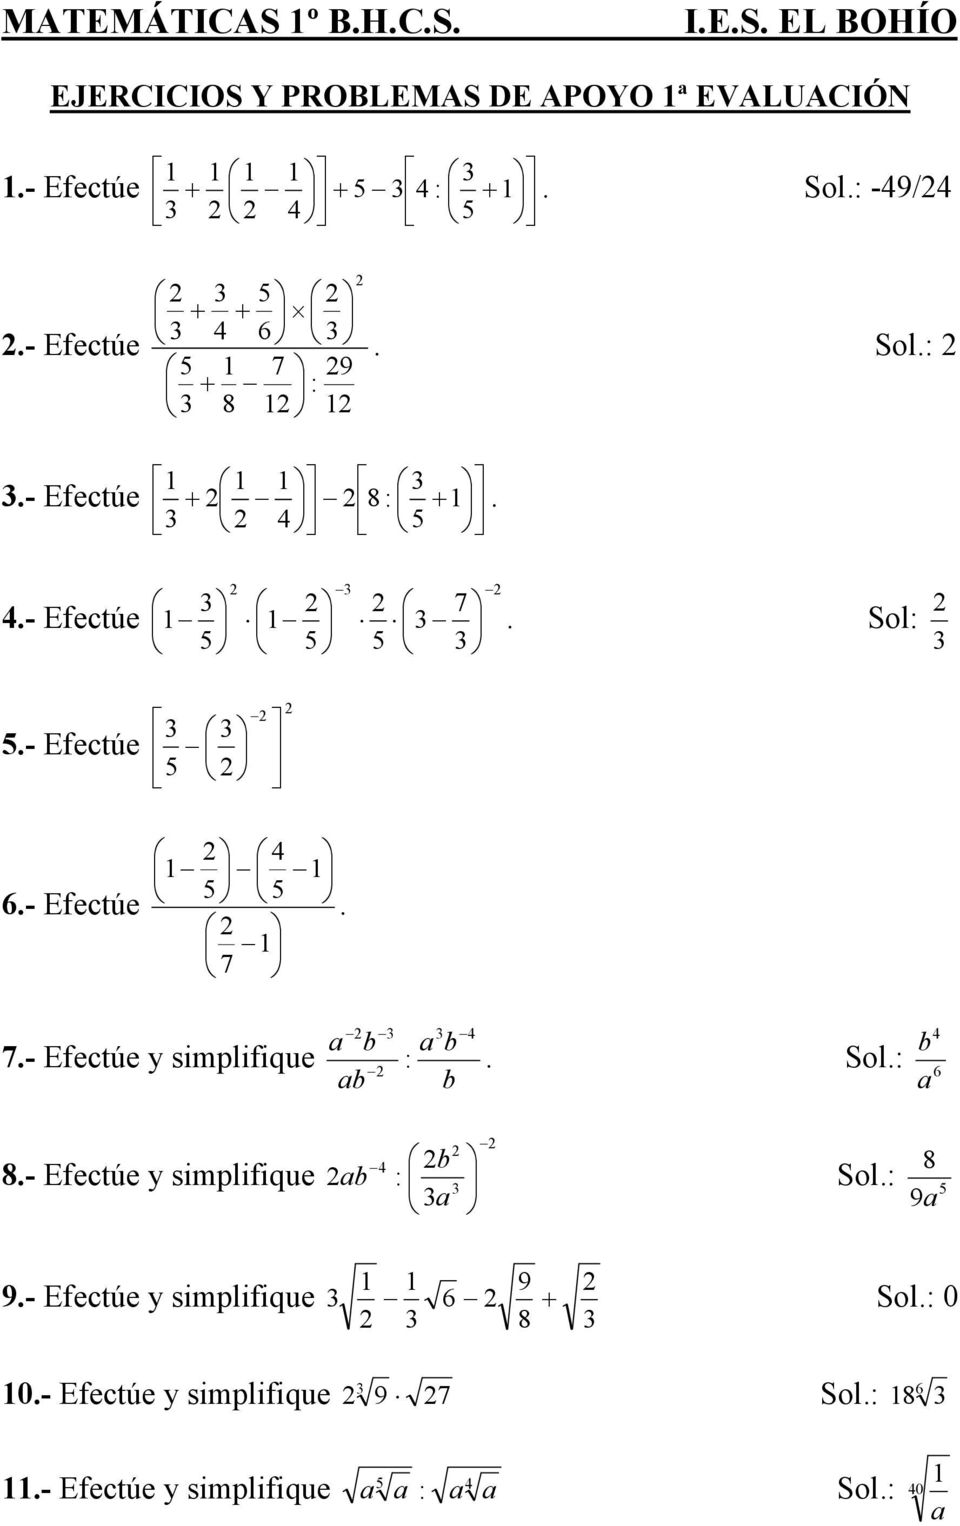 7- Eectúe y simpliique b b b b Sol 6 b 8- Eectúe y simpliique b b Sol 9 8 9- Eectúe